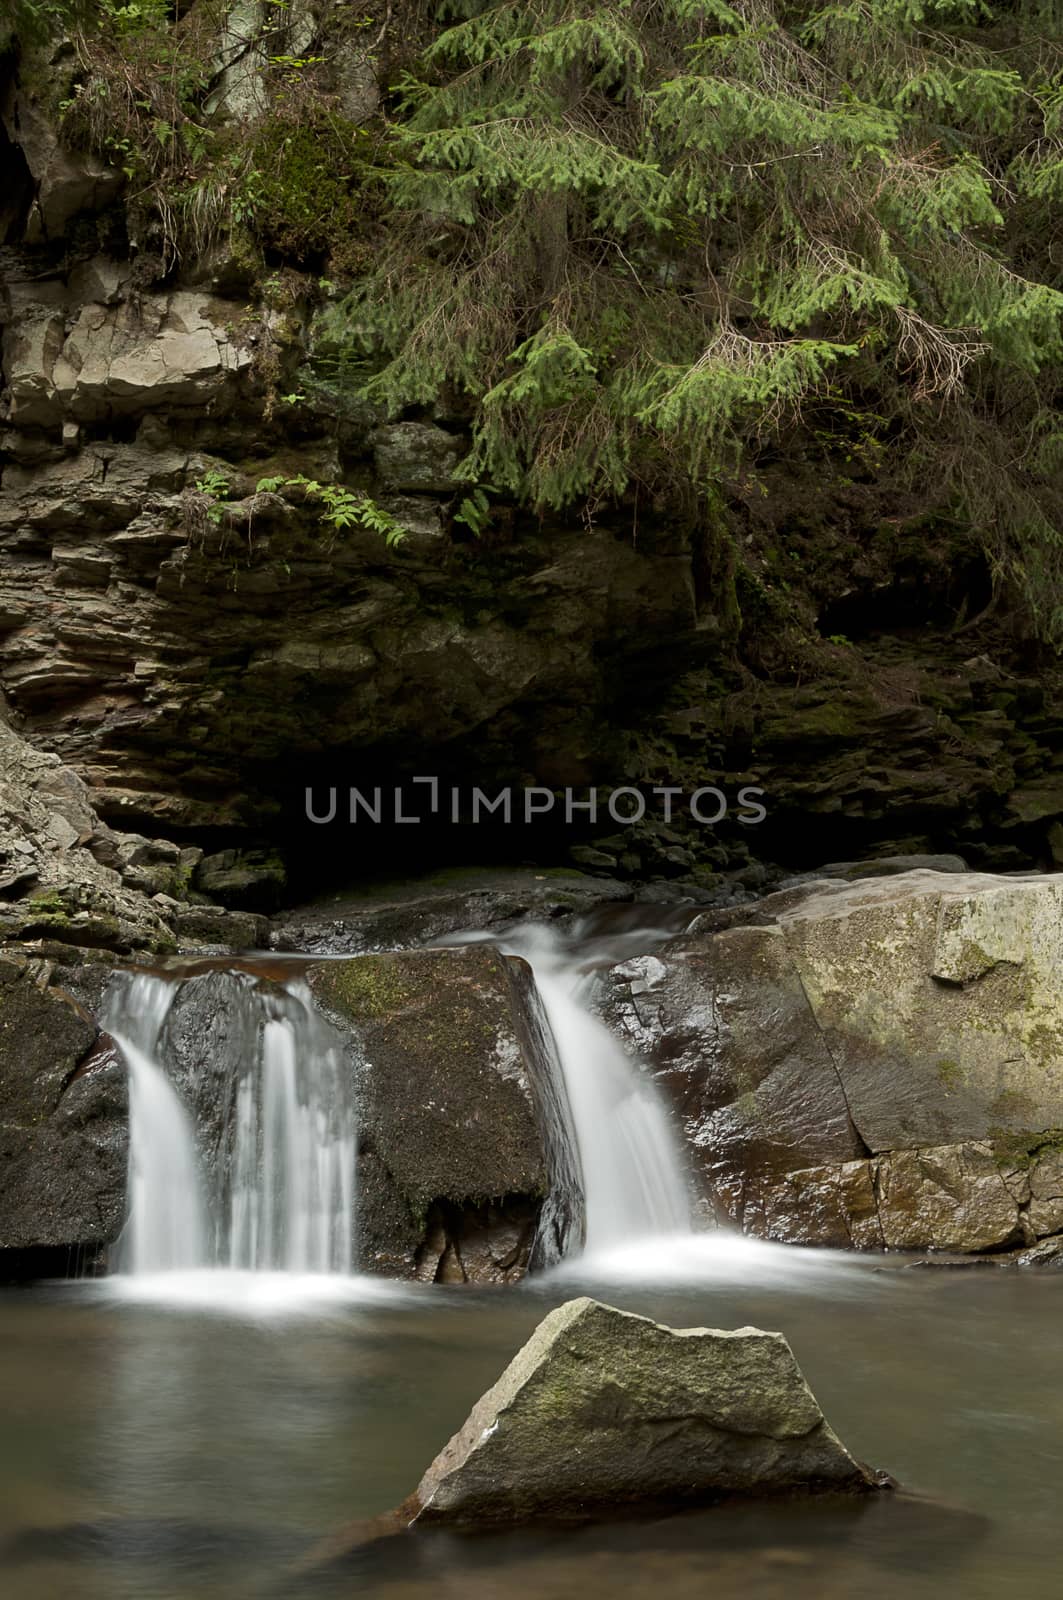 Small waterfall Divochi Sliozy on the Zhonka river in Yaremche, Ivano-Frankivsk region, Ukraine